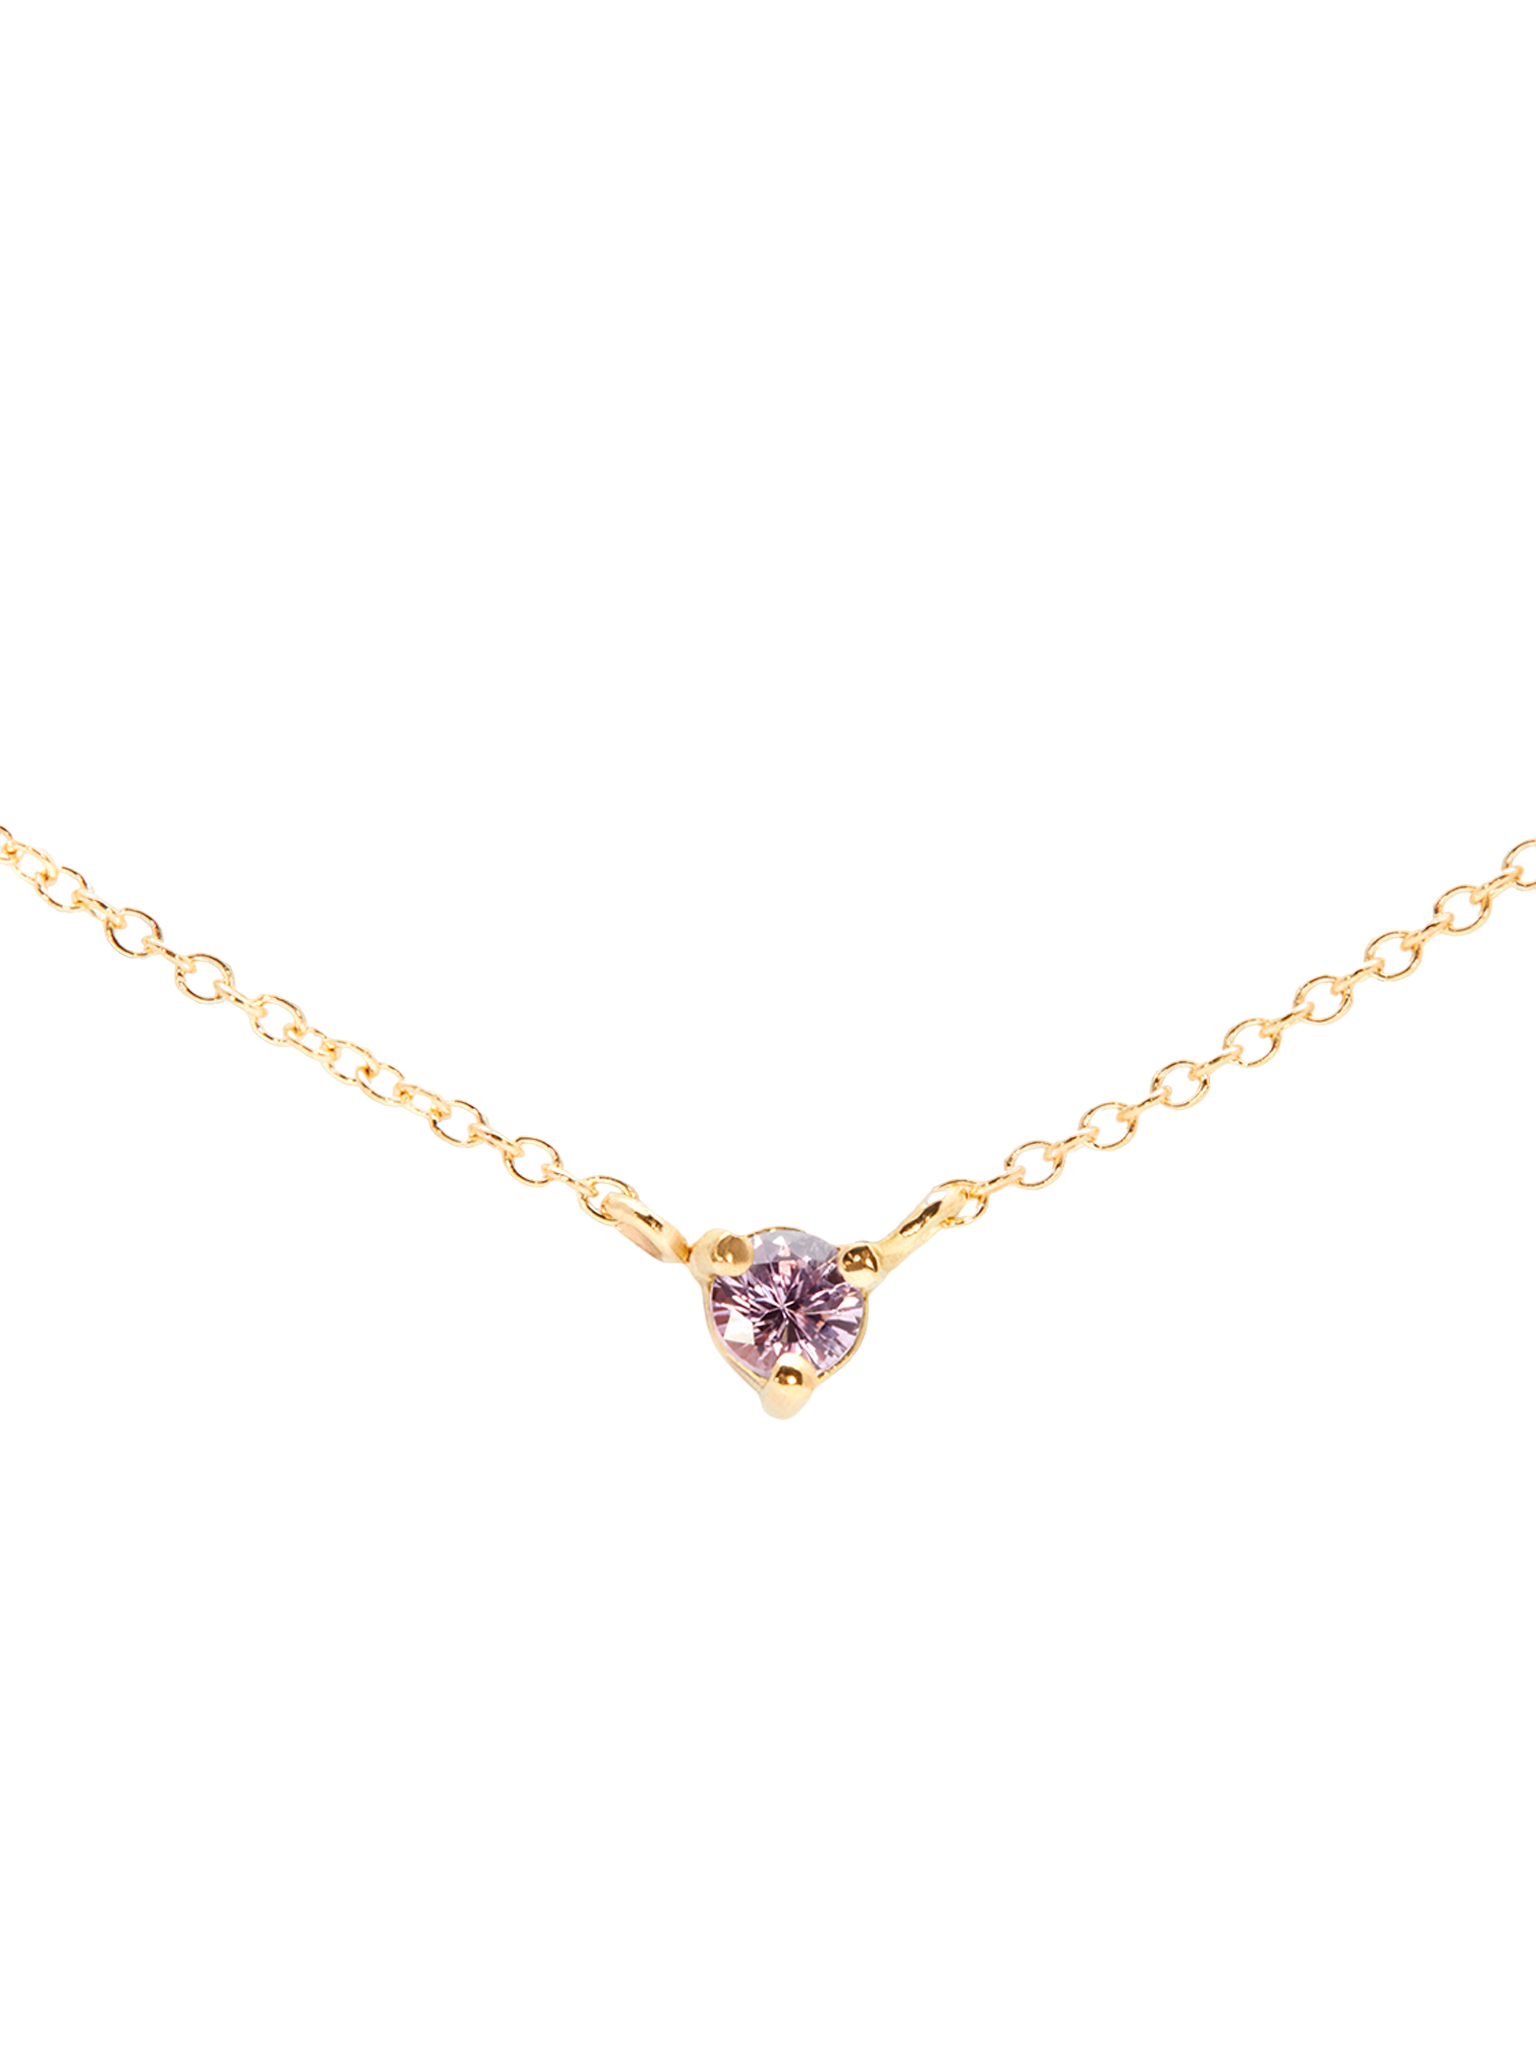 Birthstone pink sapphire necklace